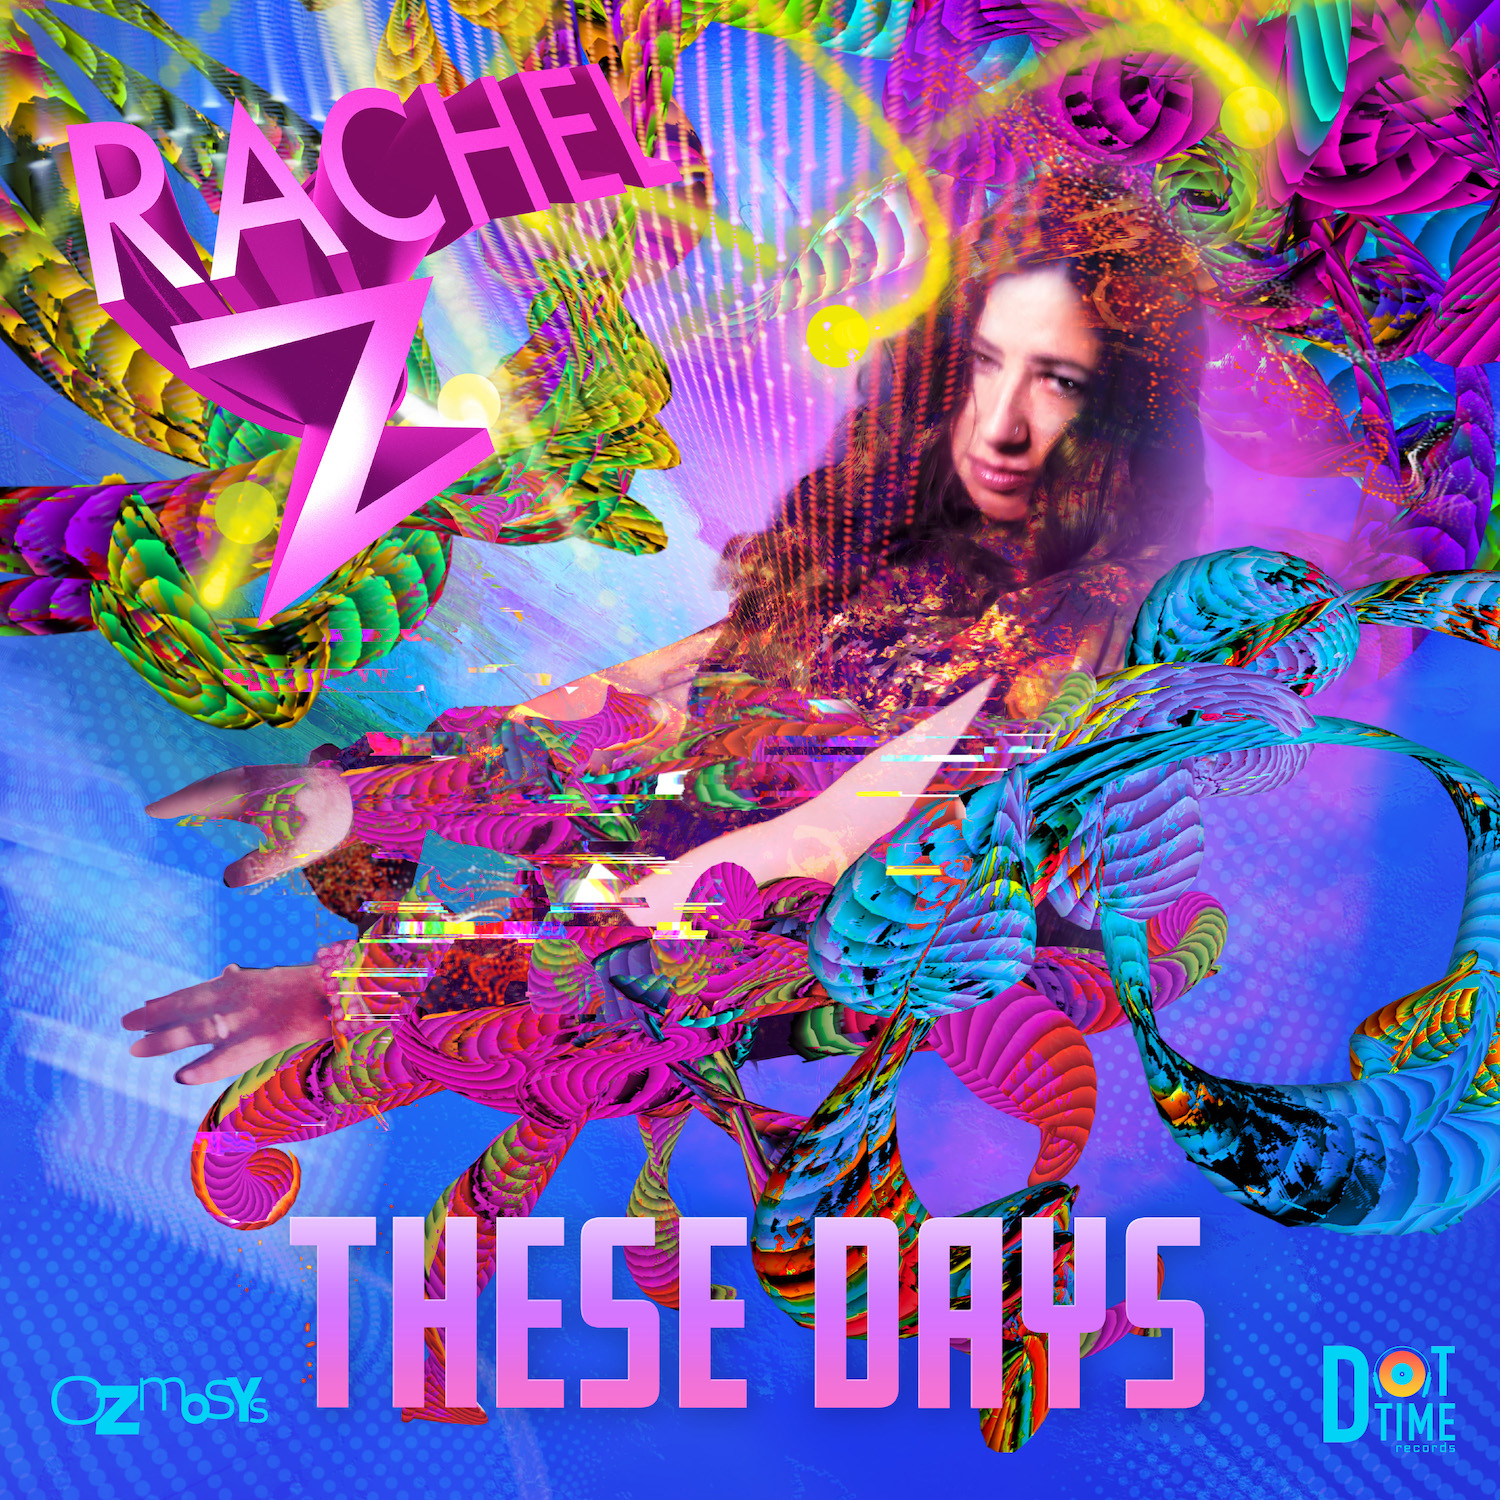 Rachel Z - These Days Cover Art 1500x1500